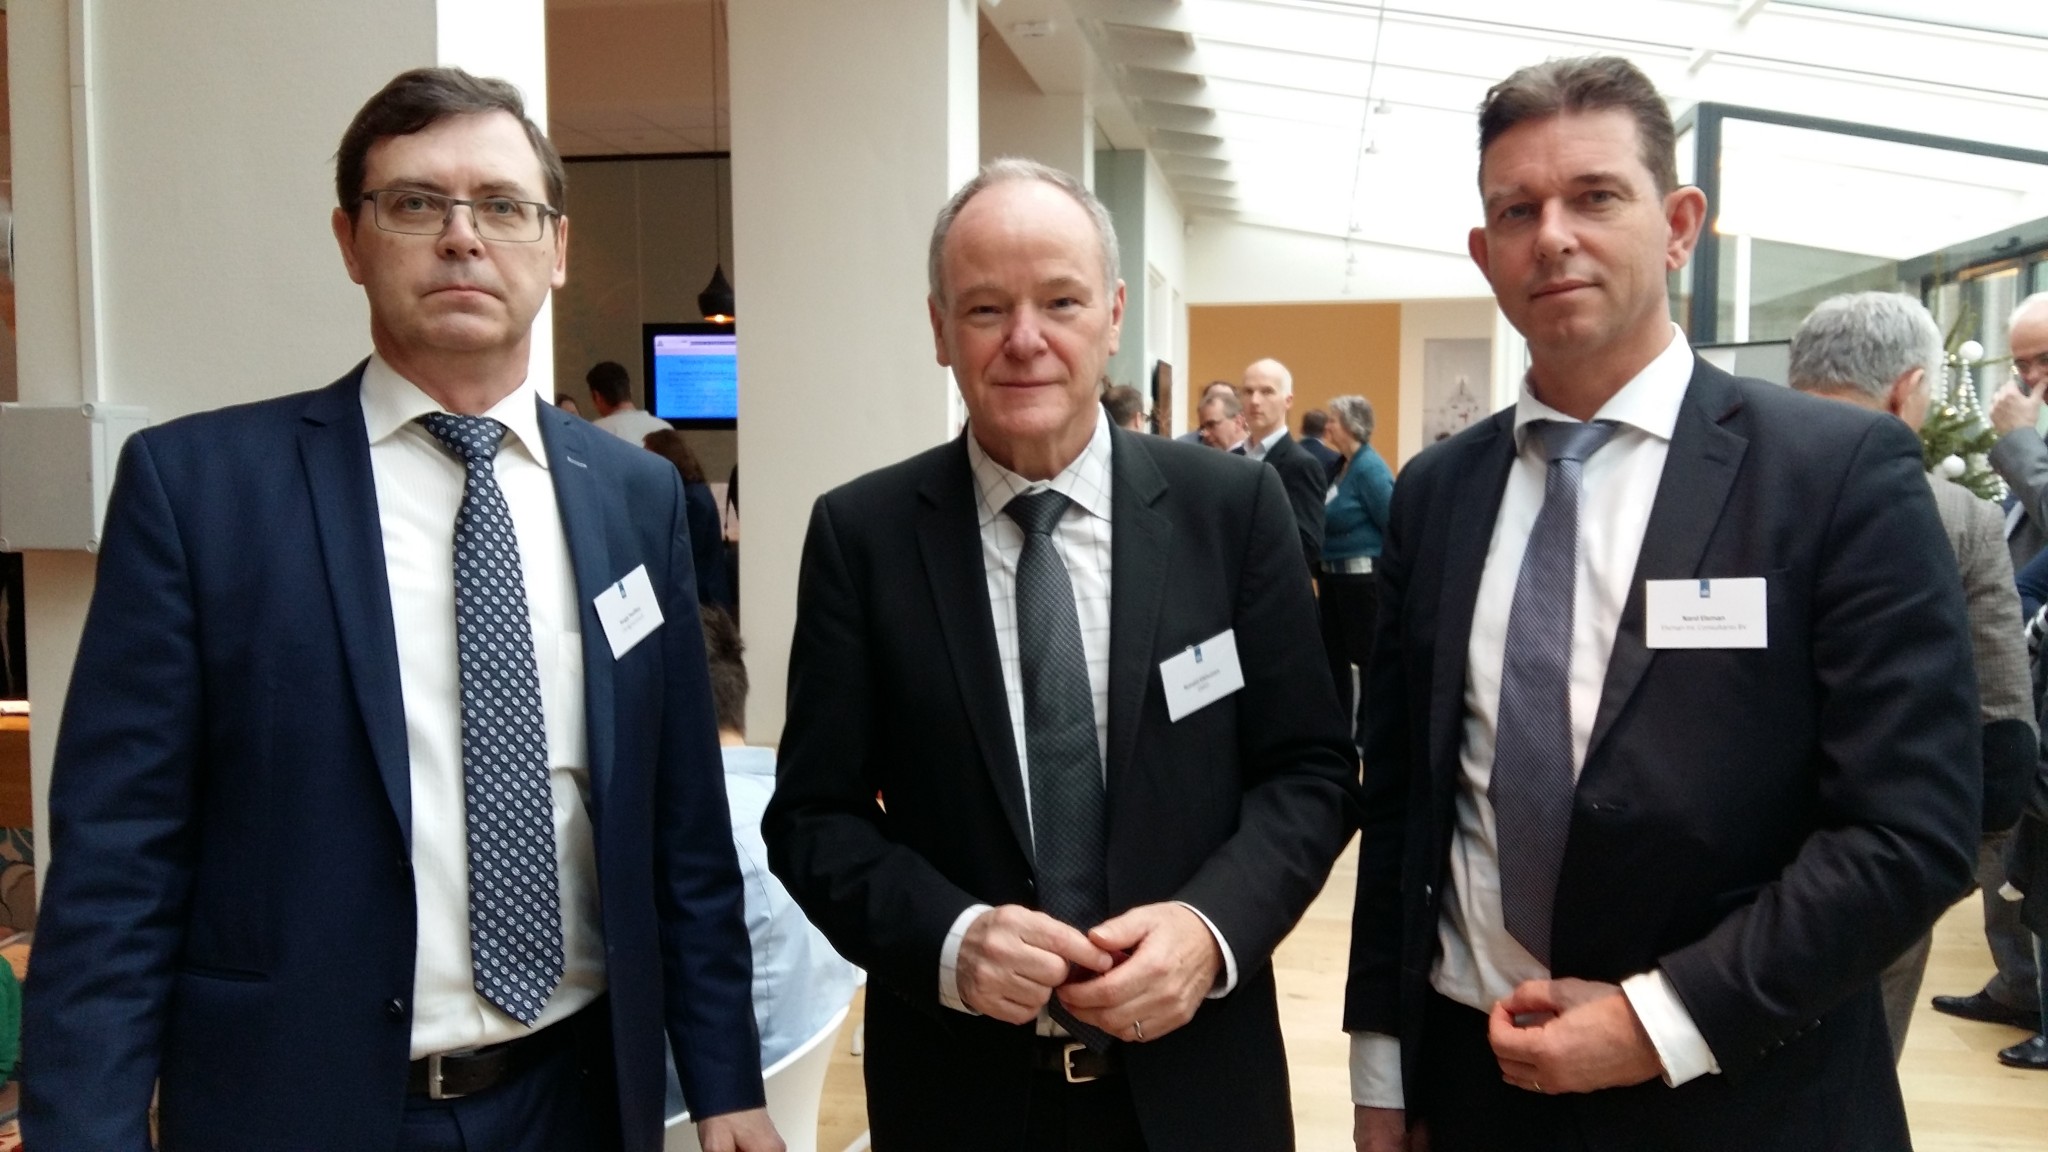 From left to right: S.Feoflov (Ukrainian partner -UkrAgroConsult), Head of EBRD Netherlands and Nard Elsman at Agribusiness event, Wageningen University (The Netherlands)